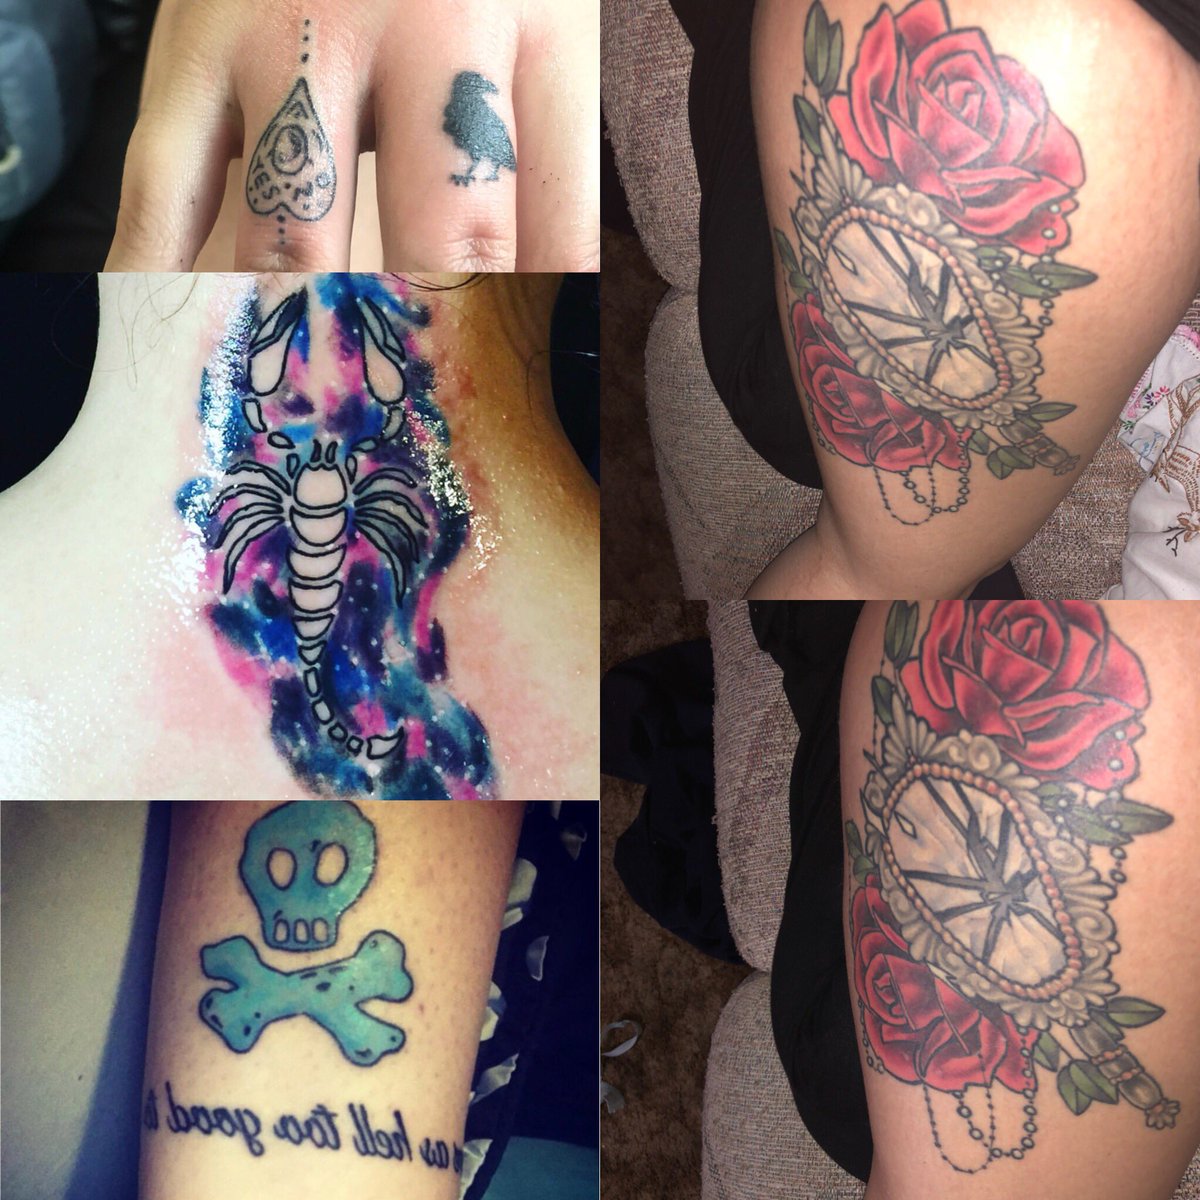 A compilation of my tattoos #tattoolife #thighpiece #necktattoo #ankletattoo